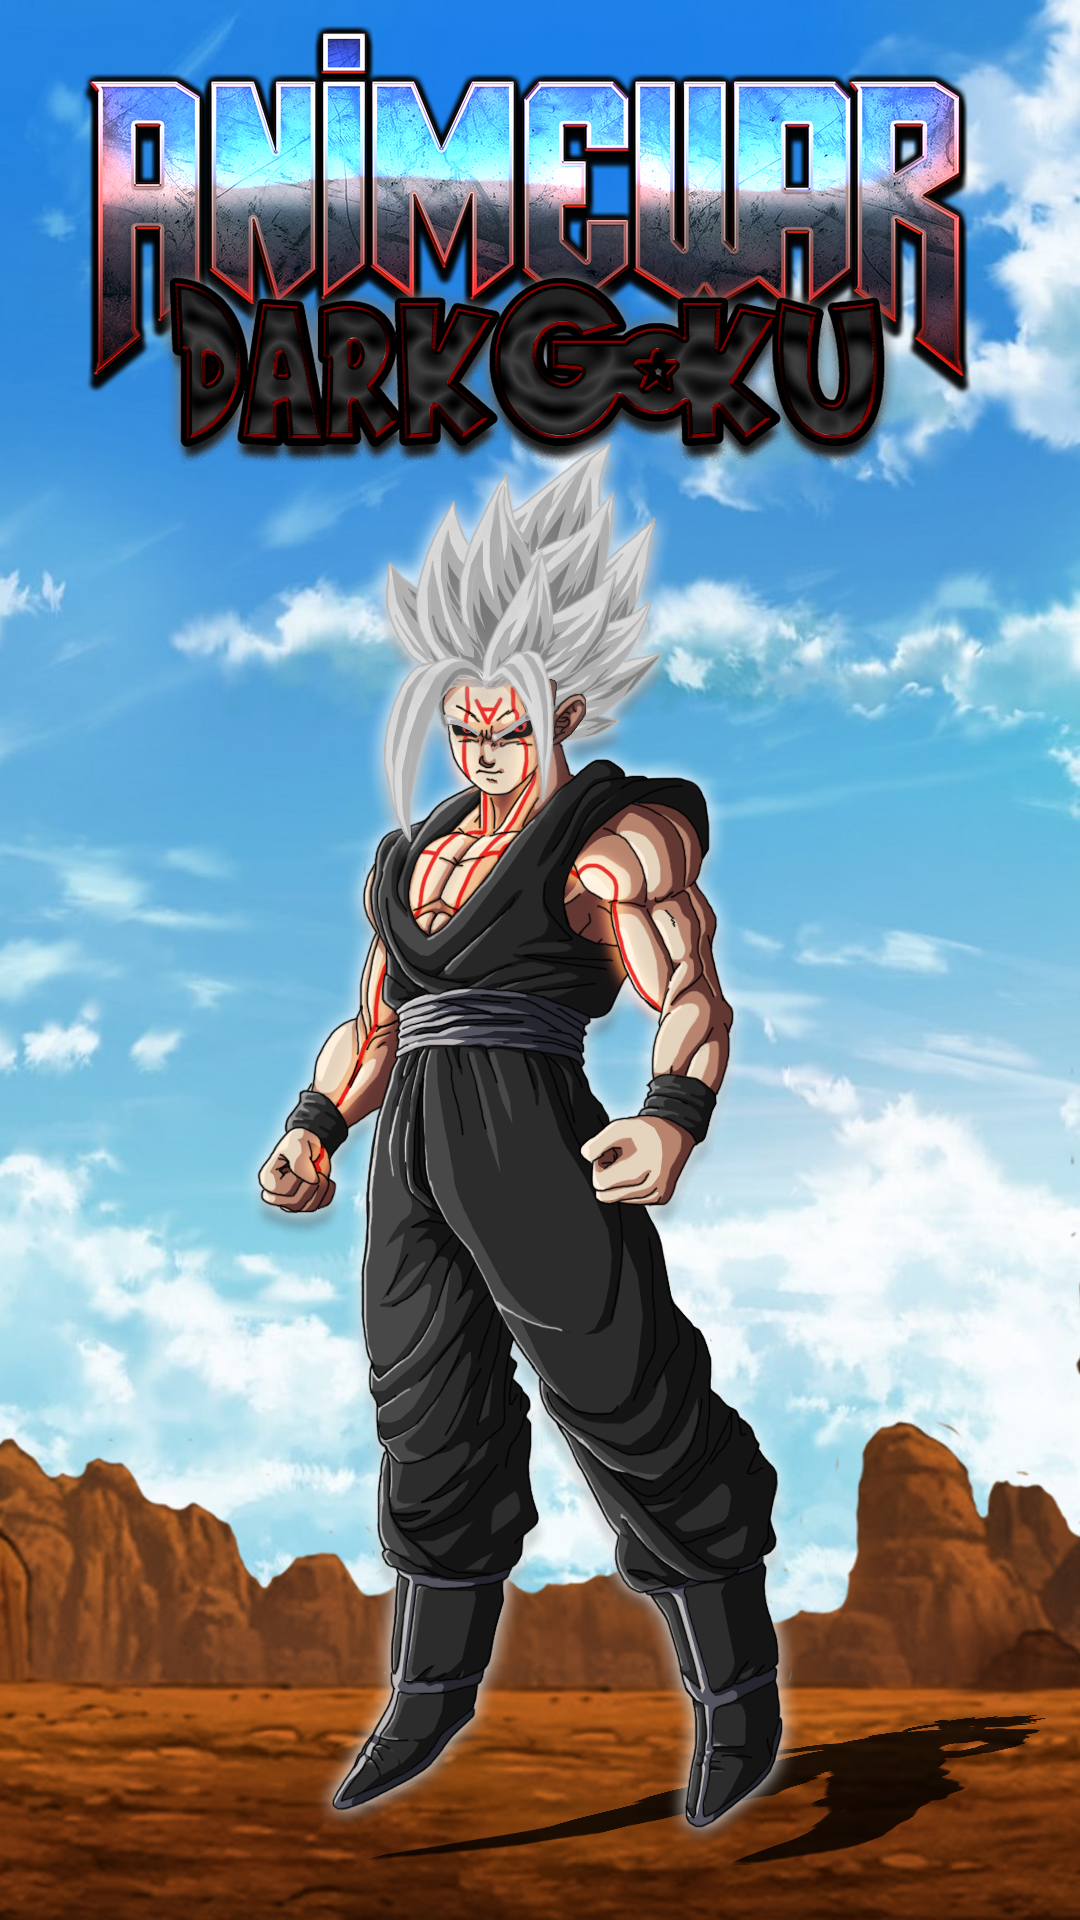 Dark Goku Omni God (anime war) by SCPDAMNED on DeviantArt